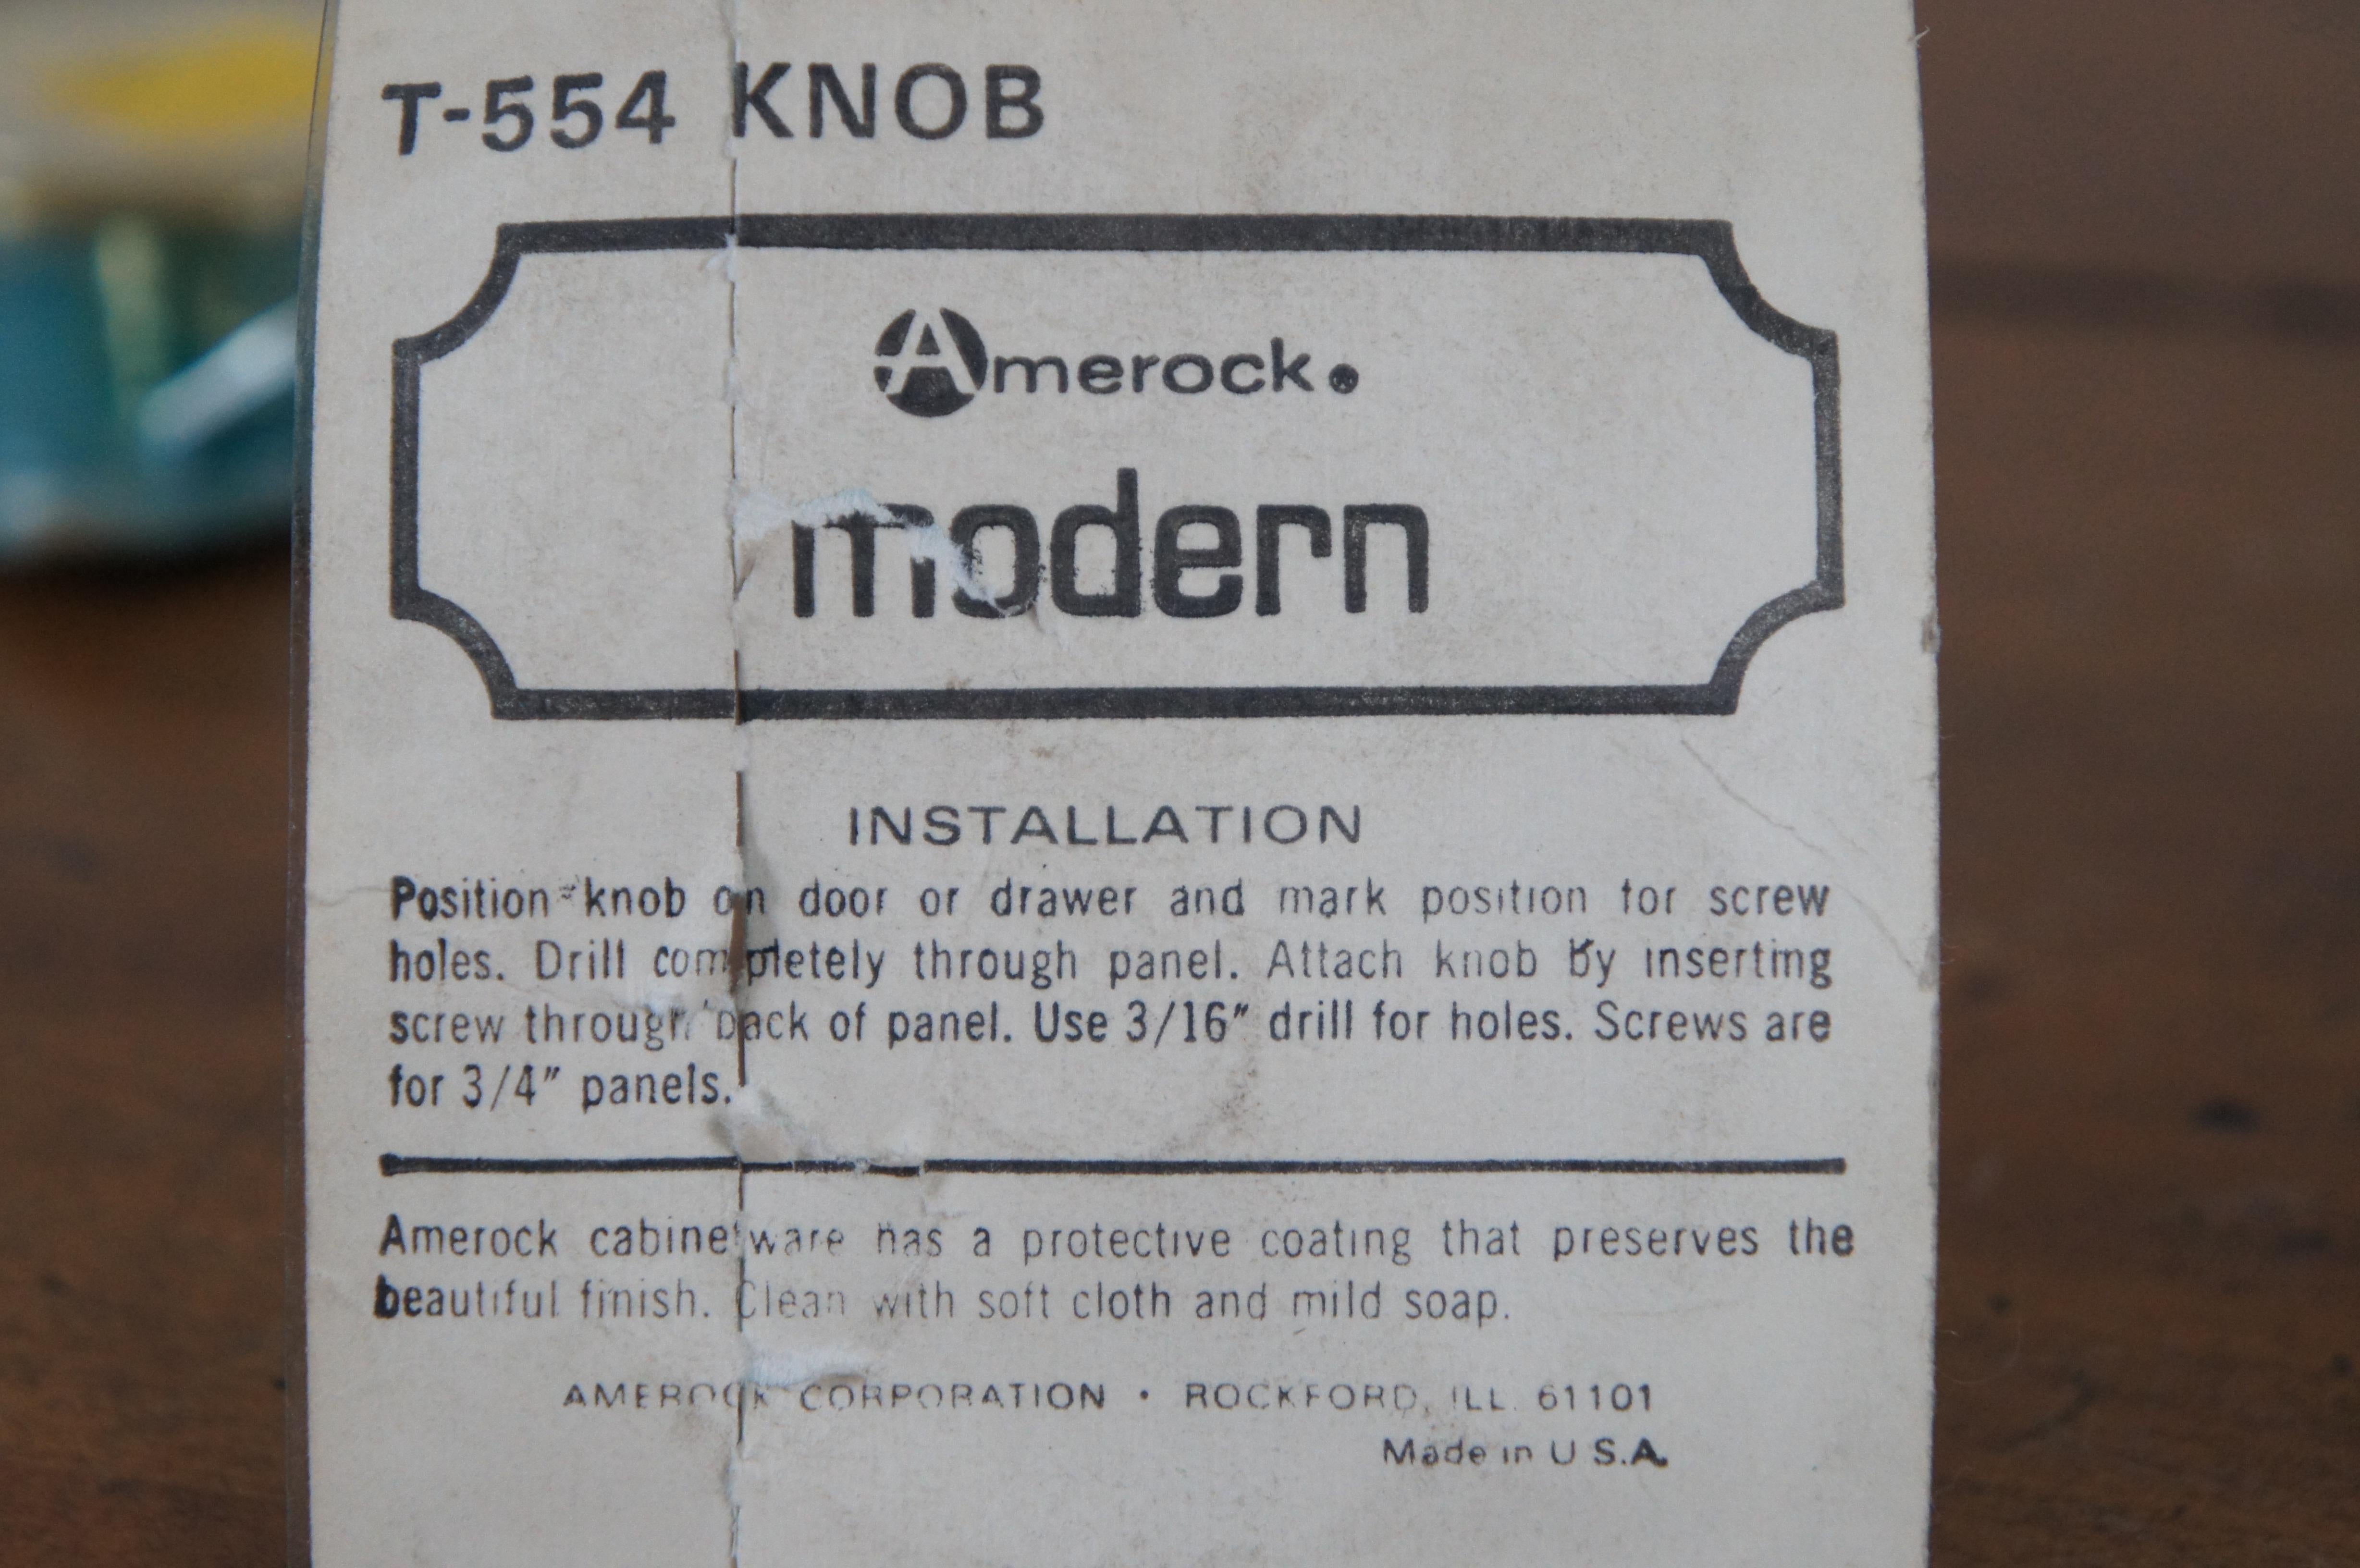 Amerock T-554-3, laiton poli, poignée de tiroir à bouton moderne en vente 6